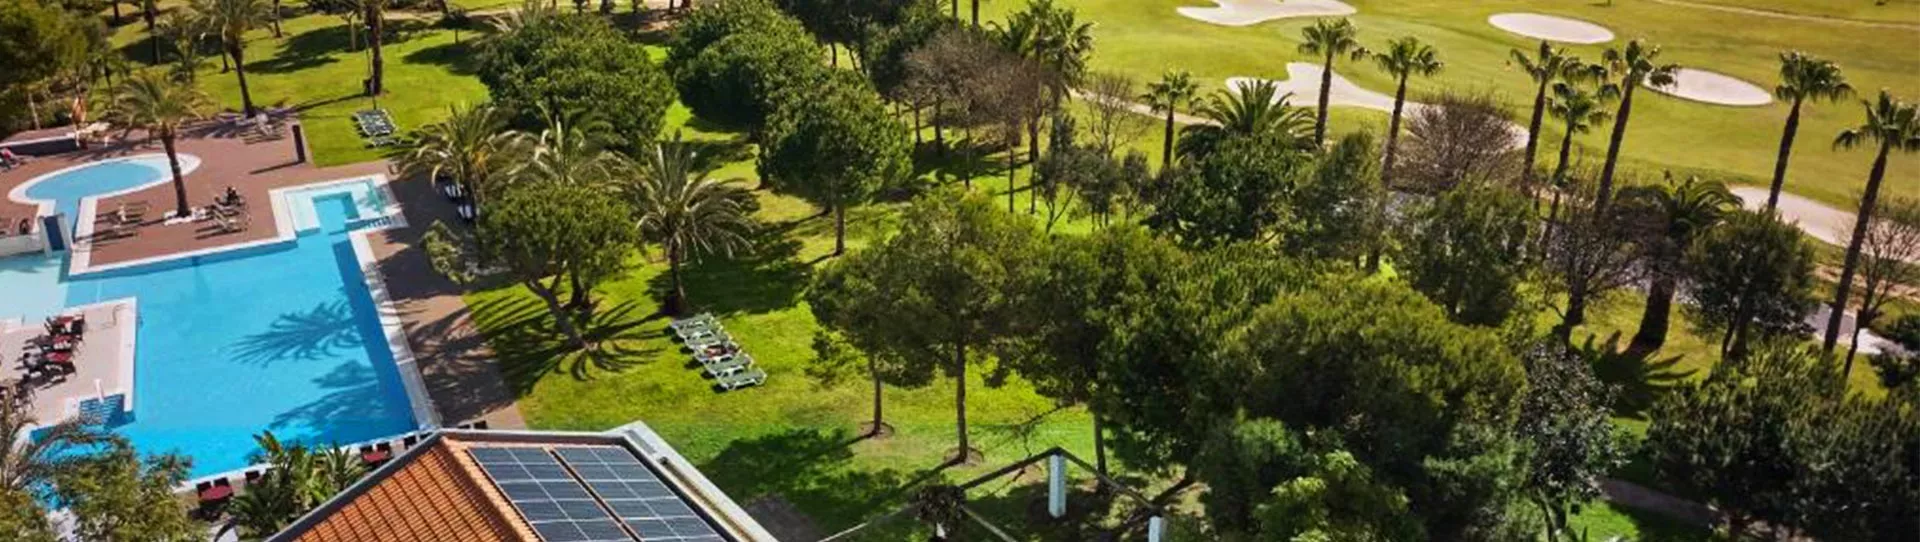 Portugal golf holidays - Robinson Club Quinta da Ria Golf Resort - Photo 1